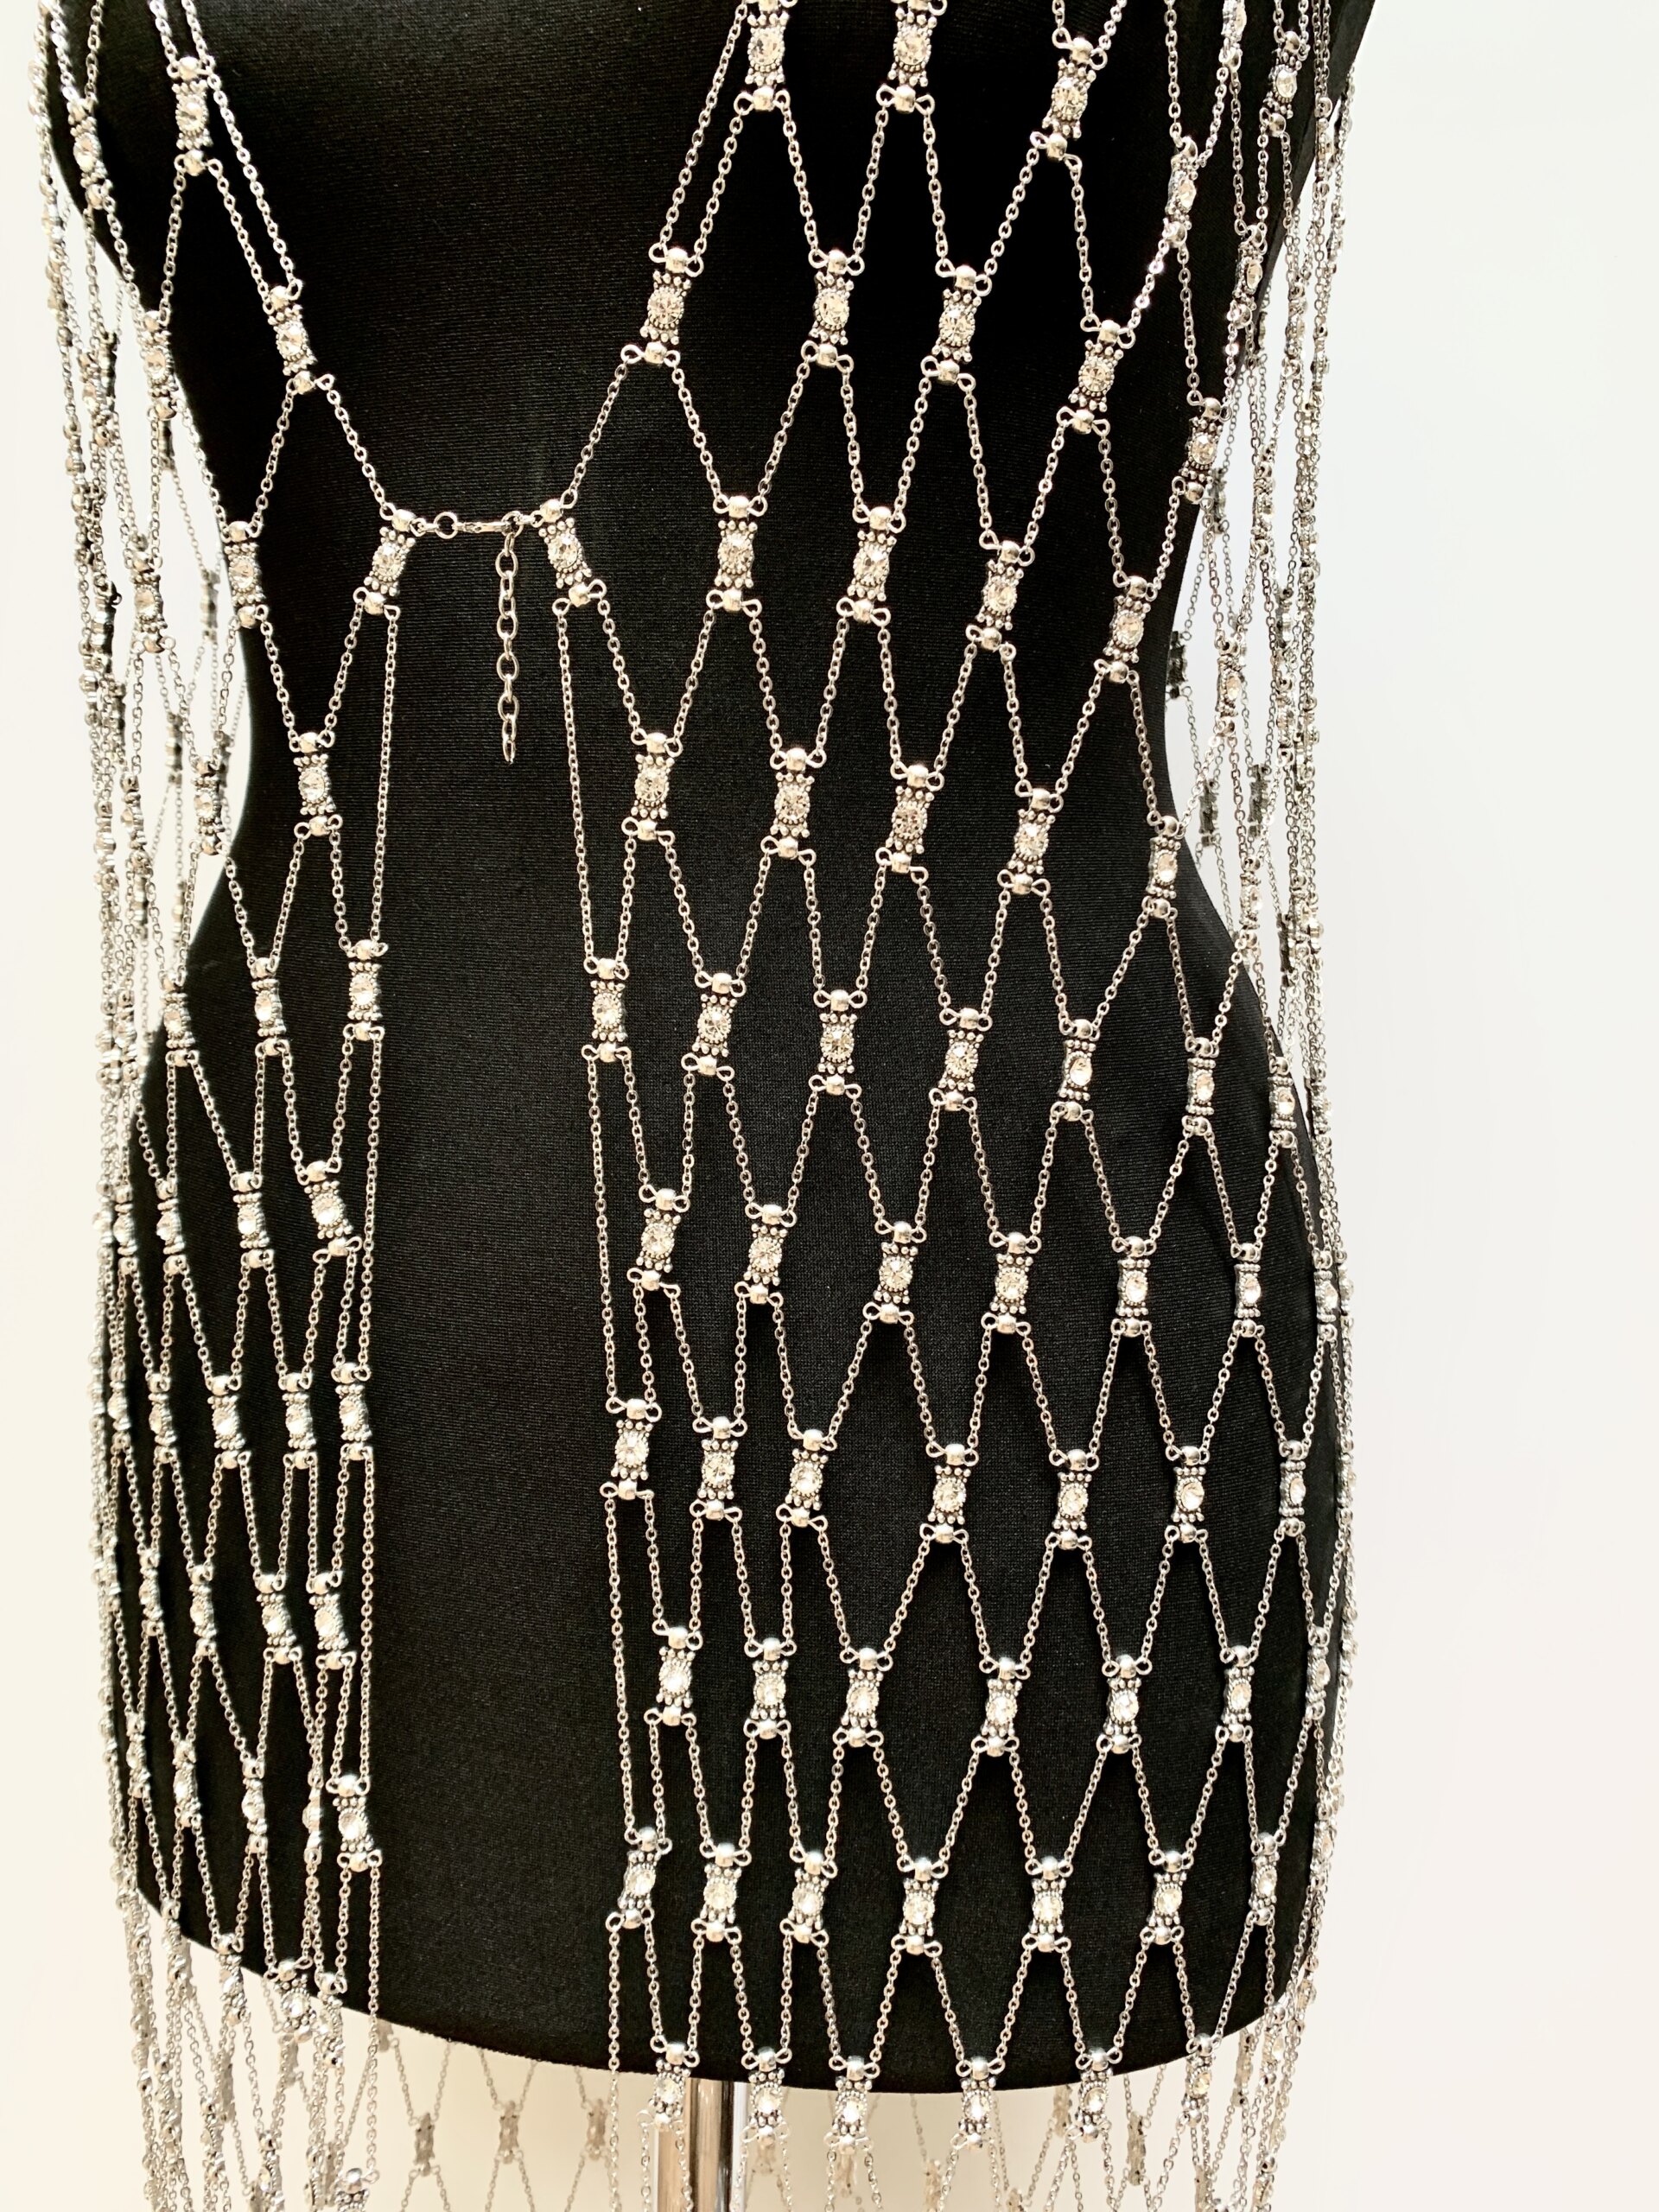 Chain Metal Jacket Elizabeth, Body Chain Dress – GetMan Jewelry